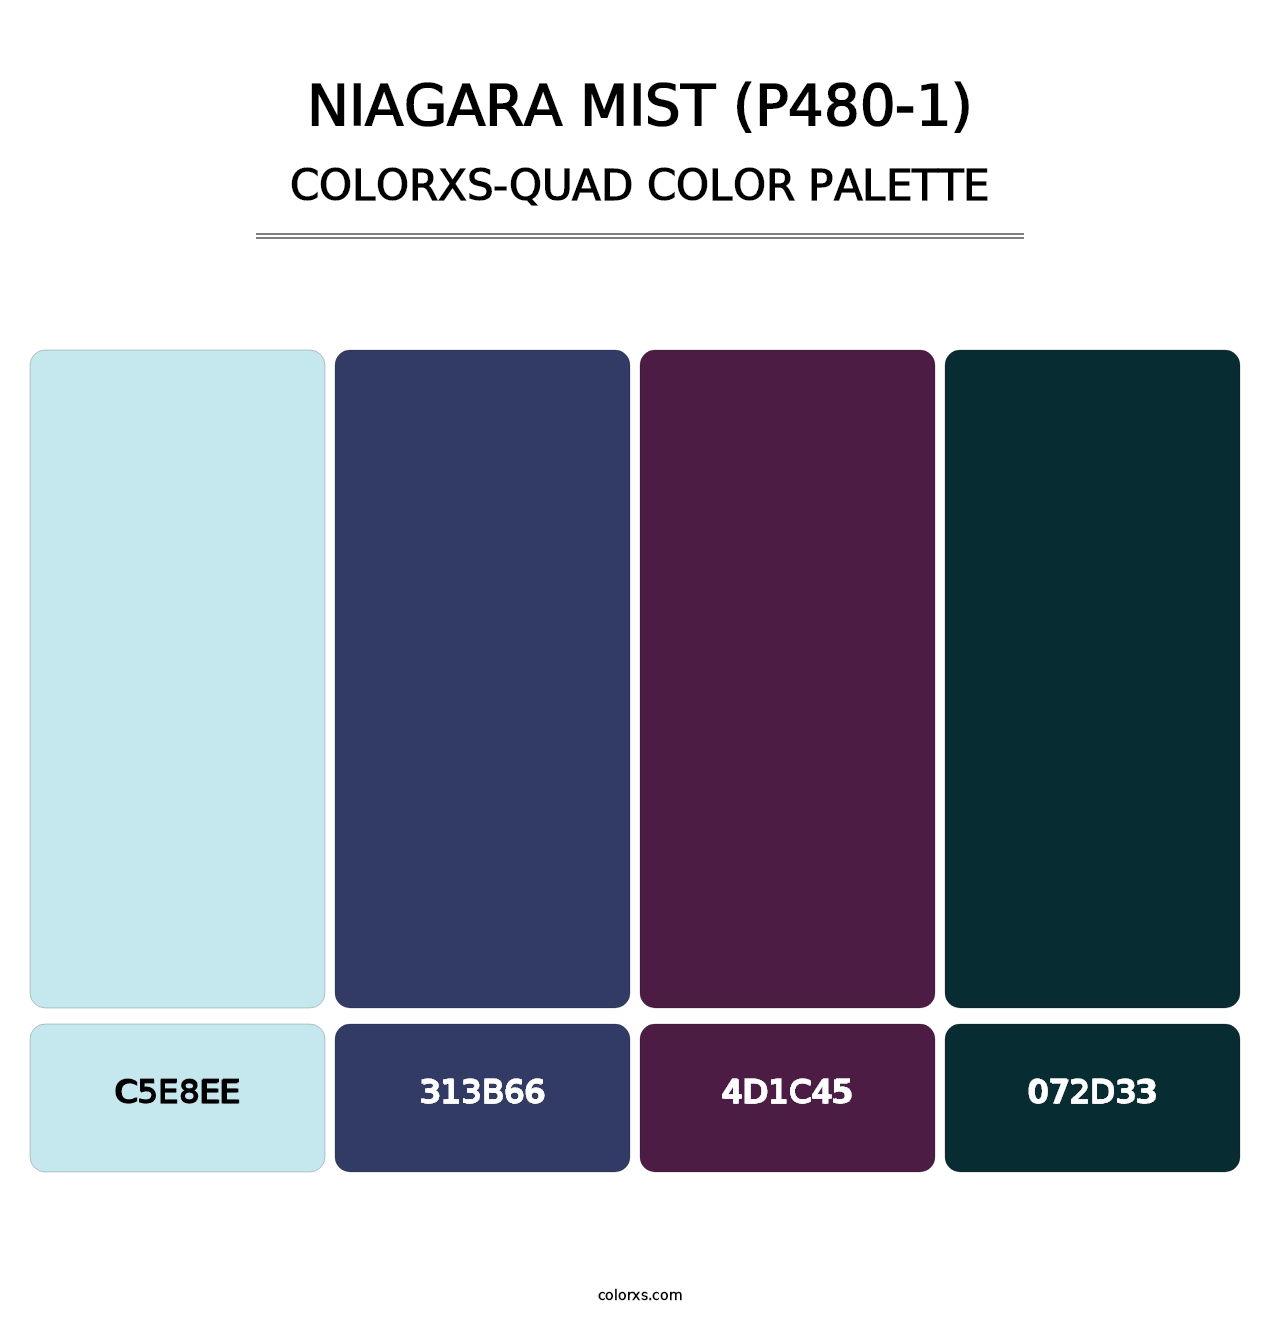 Niagara Mist (P480-1) - Colorxs Quad Palette